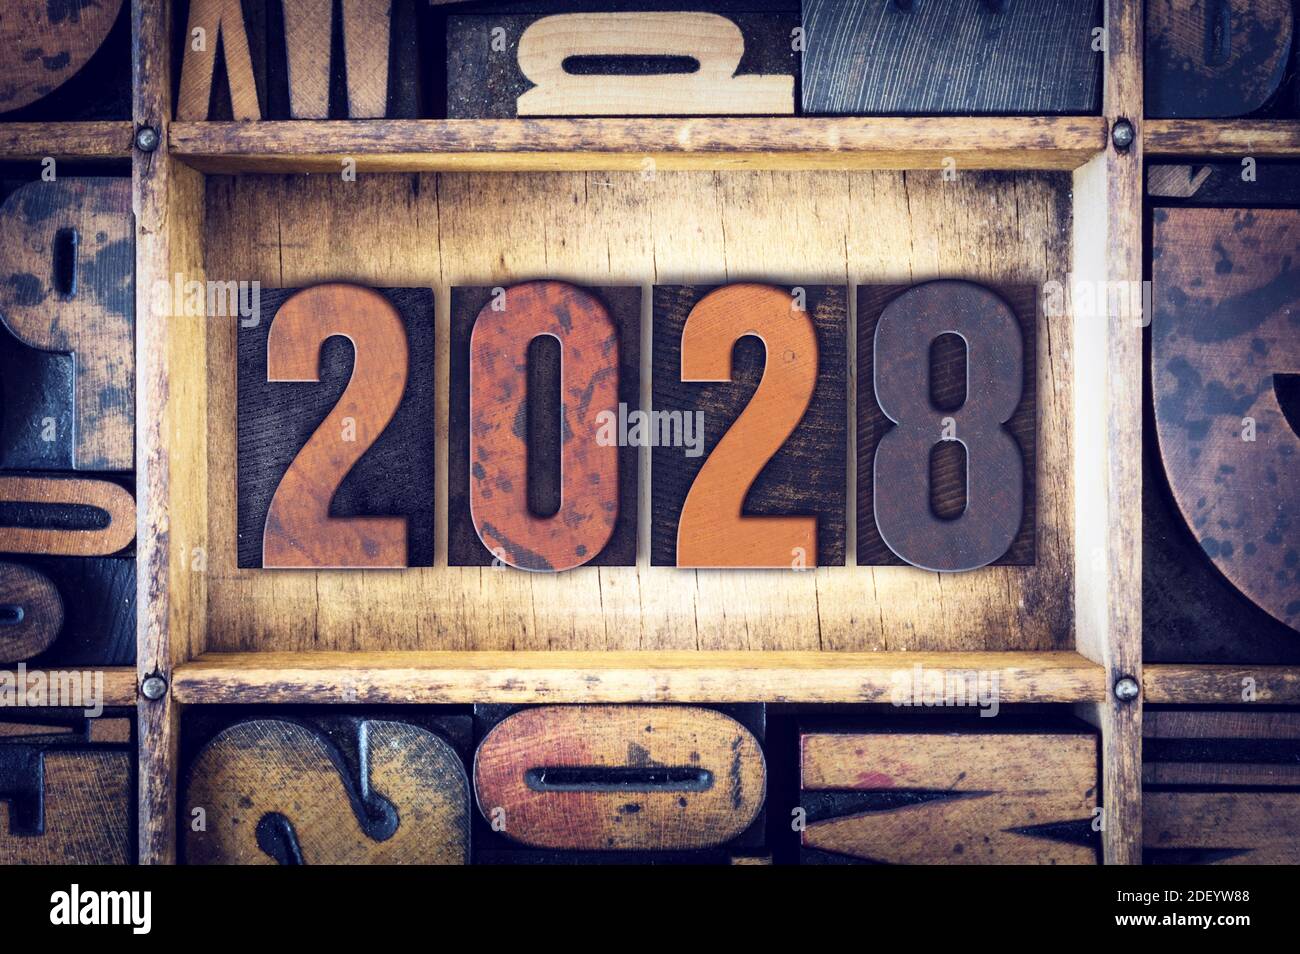 The year 2028 written in old vintage letterpress type. Stock Photo